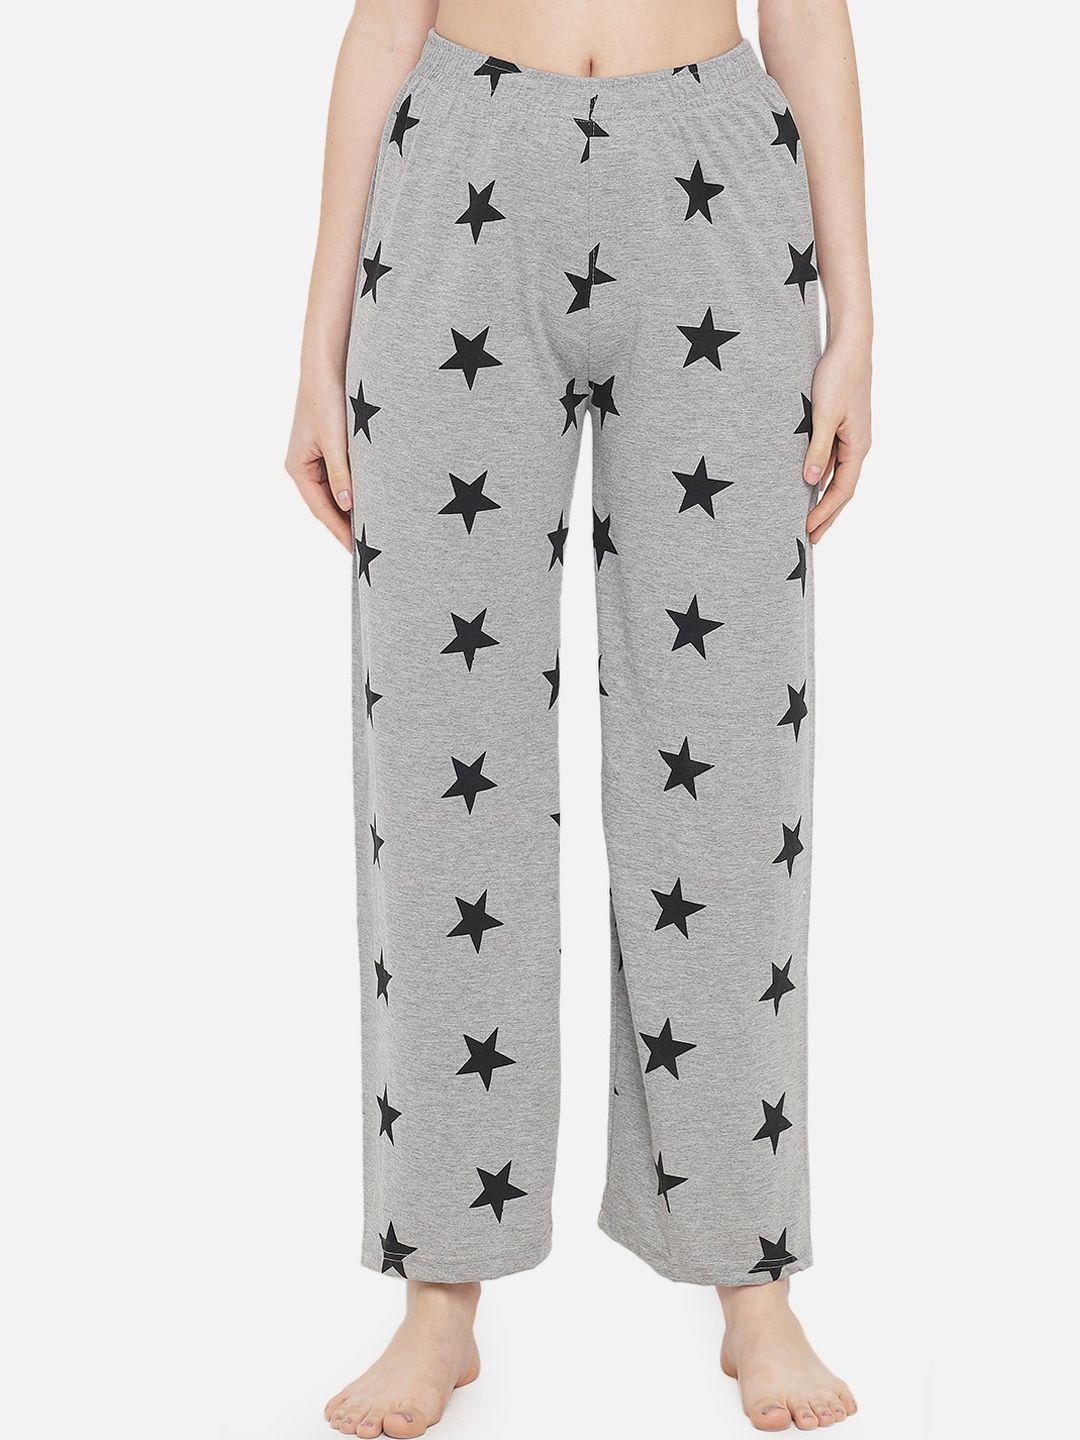 fflirtygo women grey & black star printed pyjamas